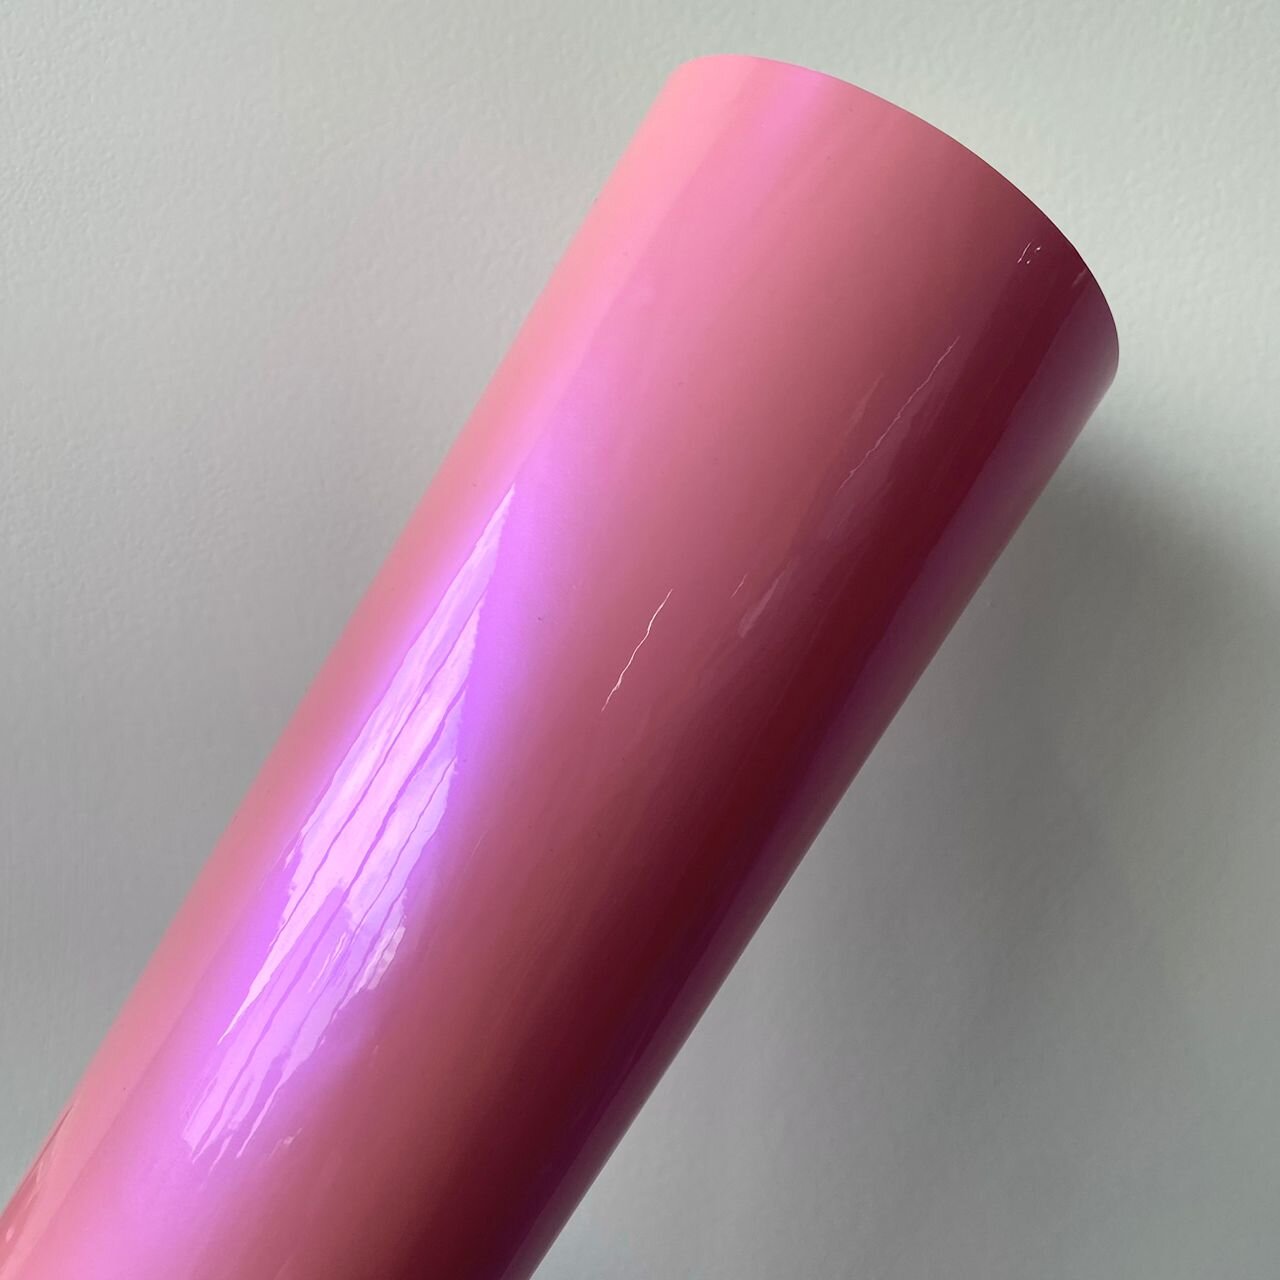 Erlkönig Pink Autofolie: Transform Your Prototype with Air Channel C